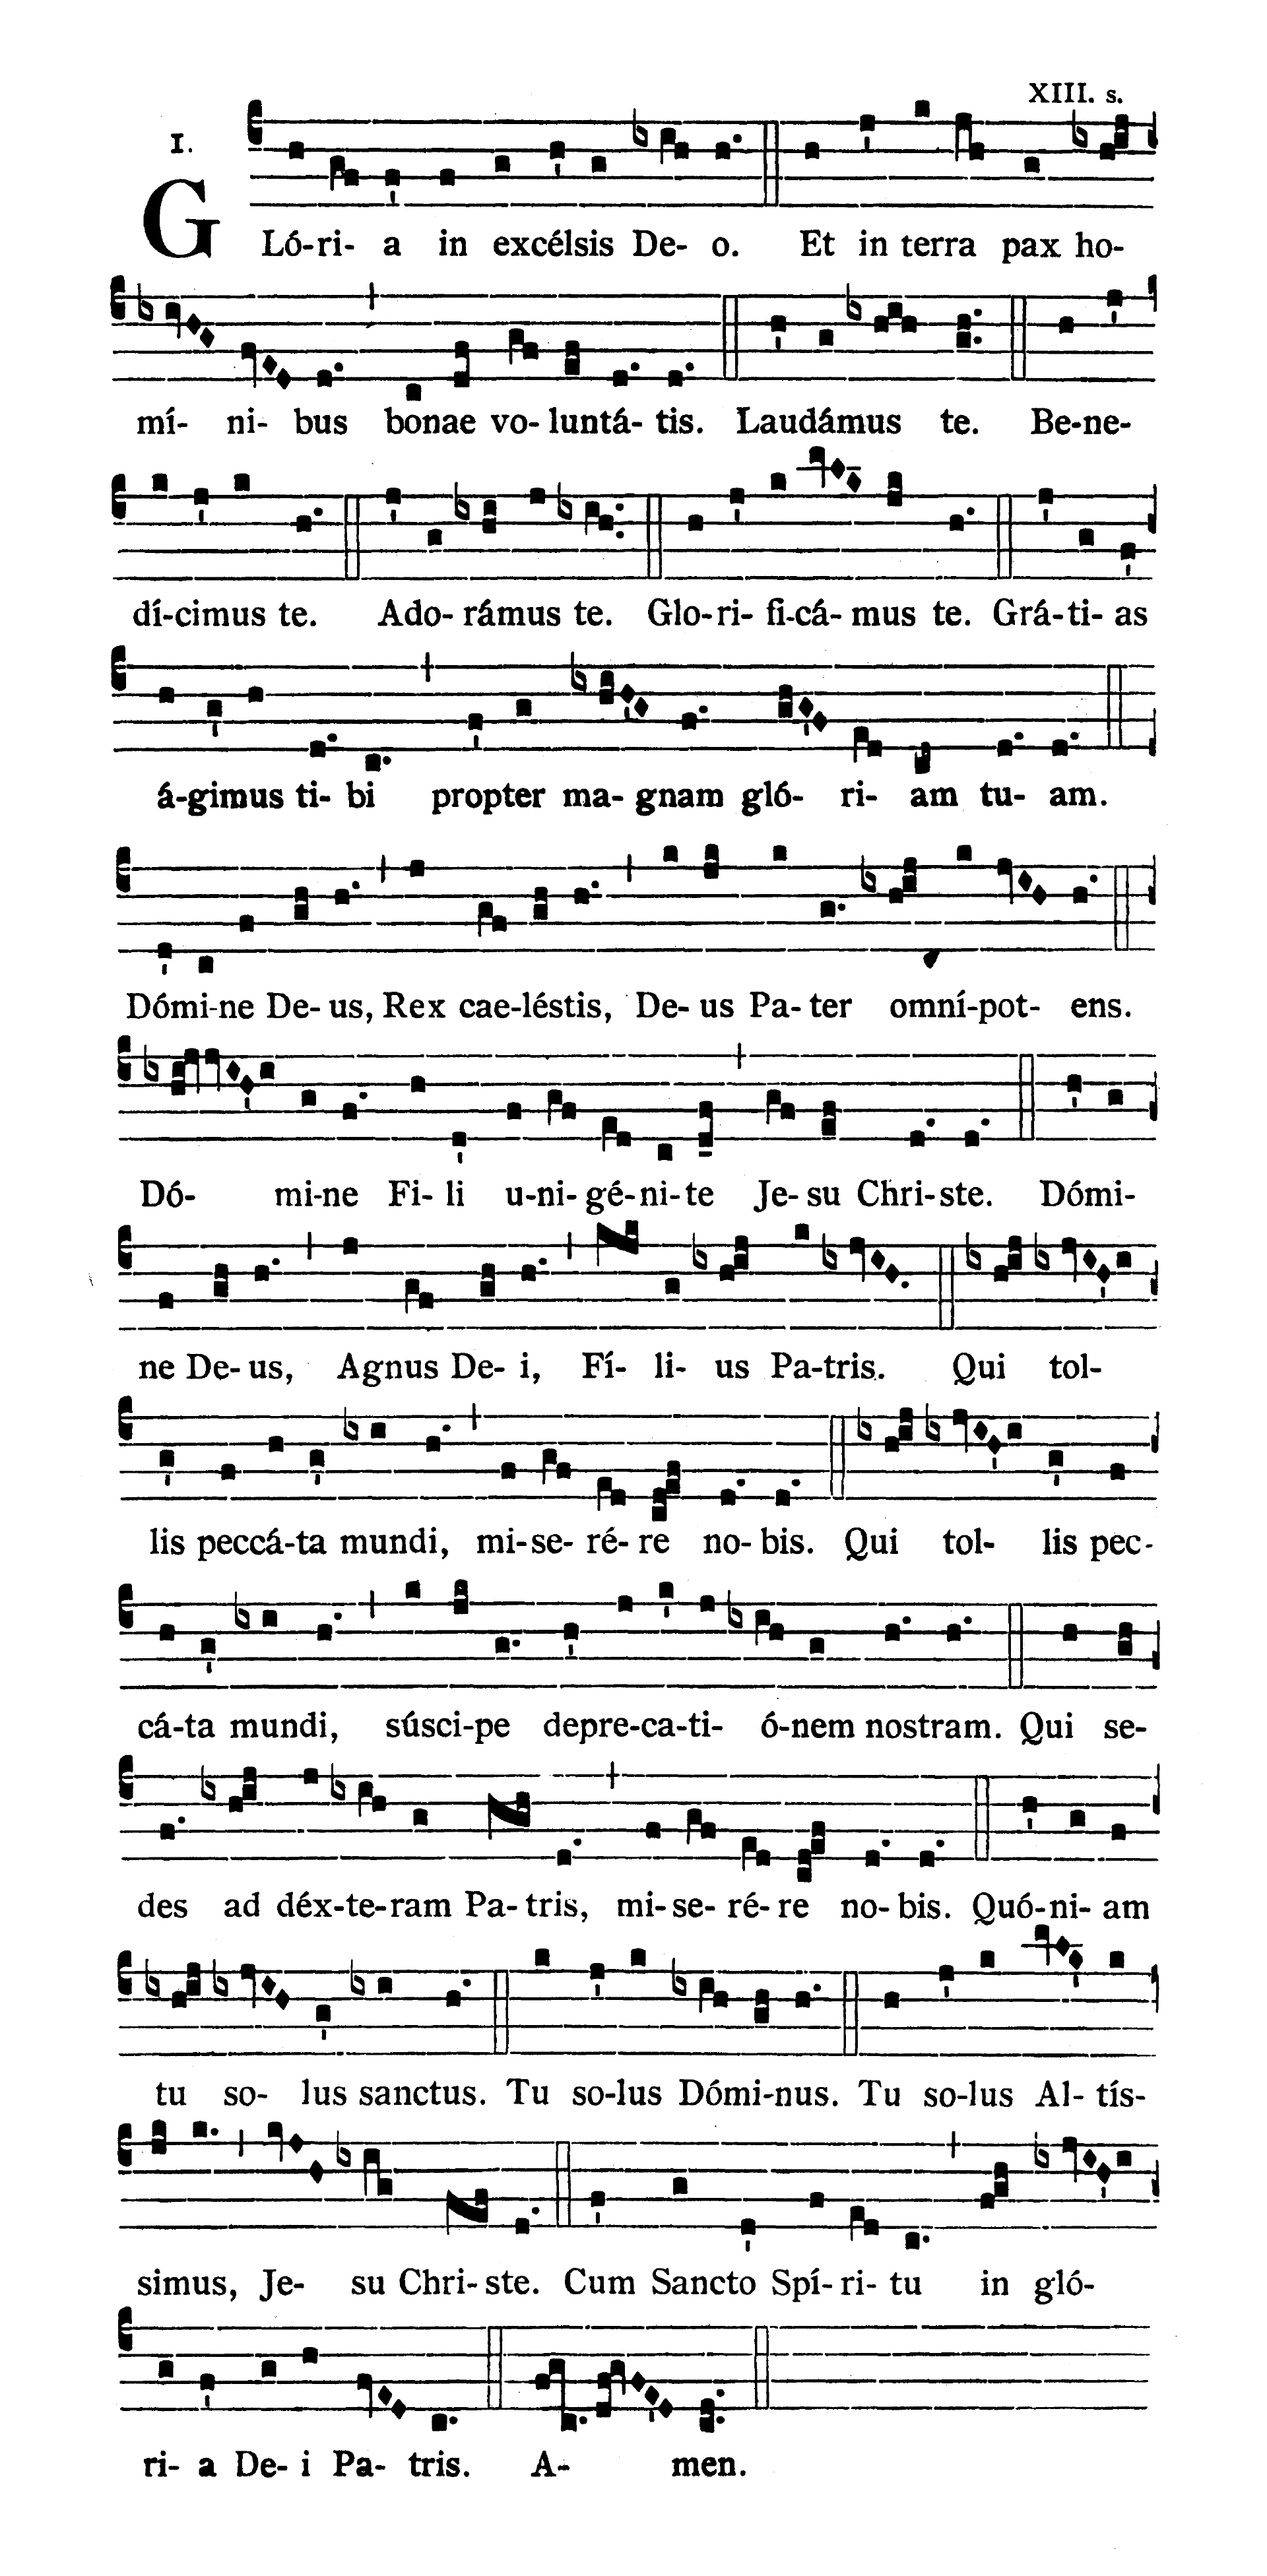 Missa II (Kyrie fons bonitatis) - Gloria